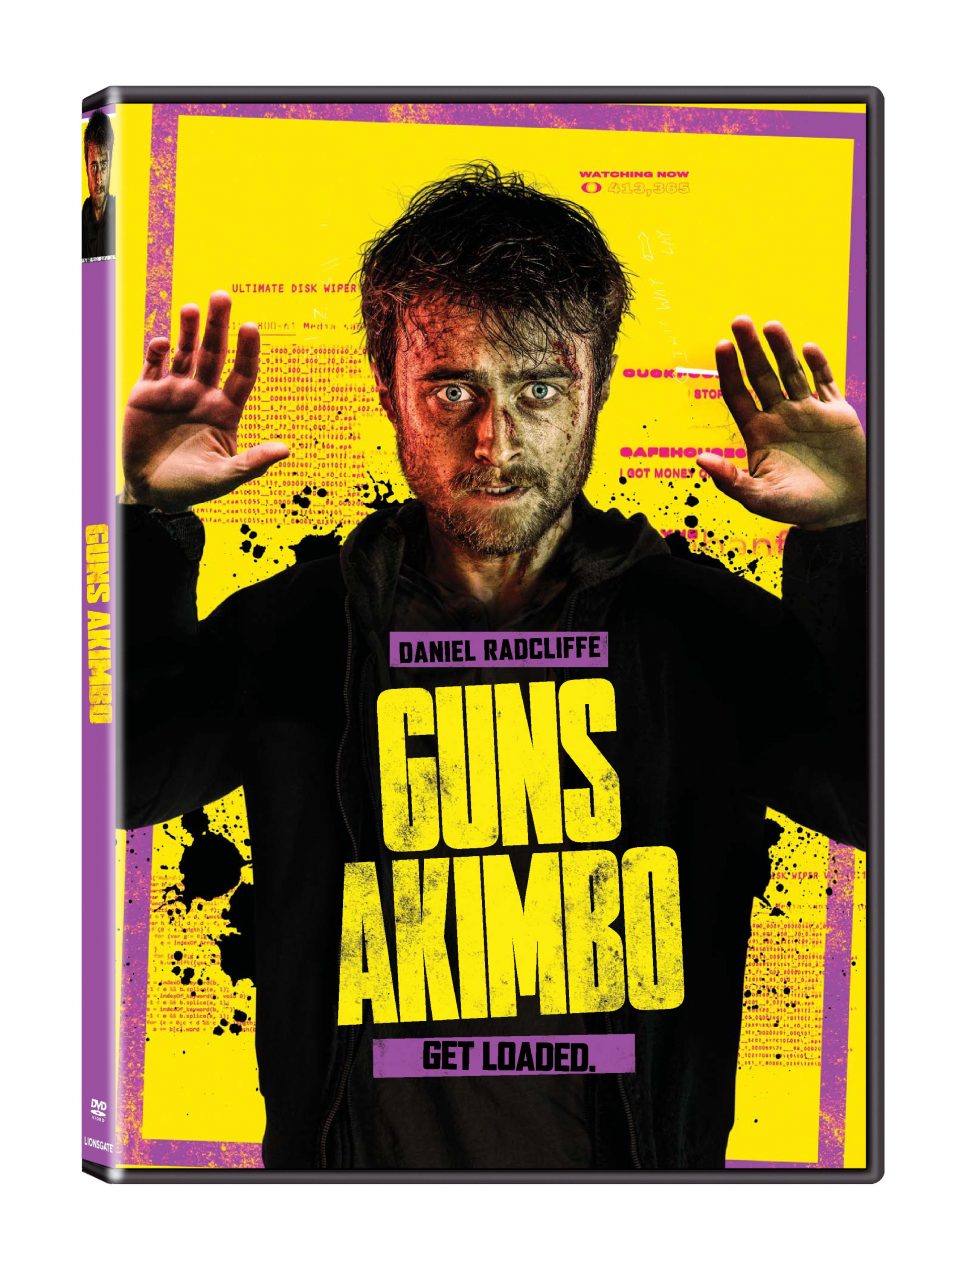 Guns Akimbo DVD cover (Lionsgate Home Entertainment)